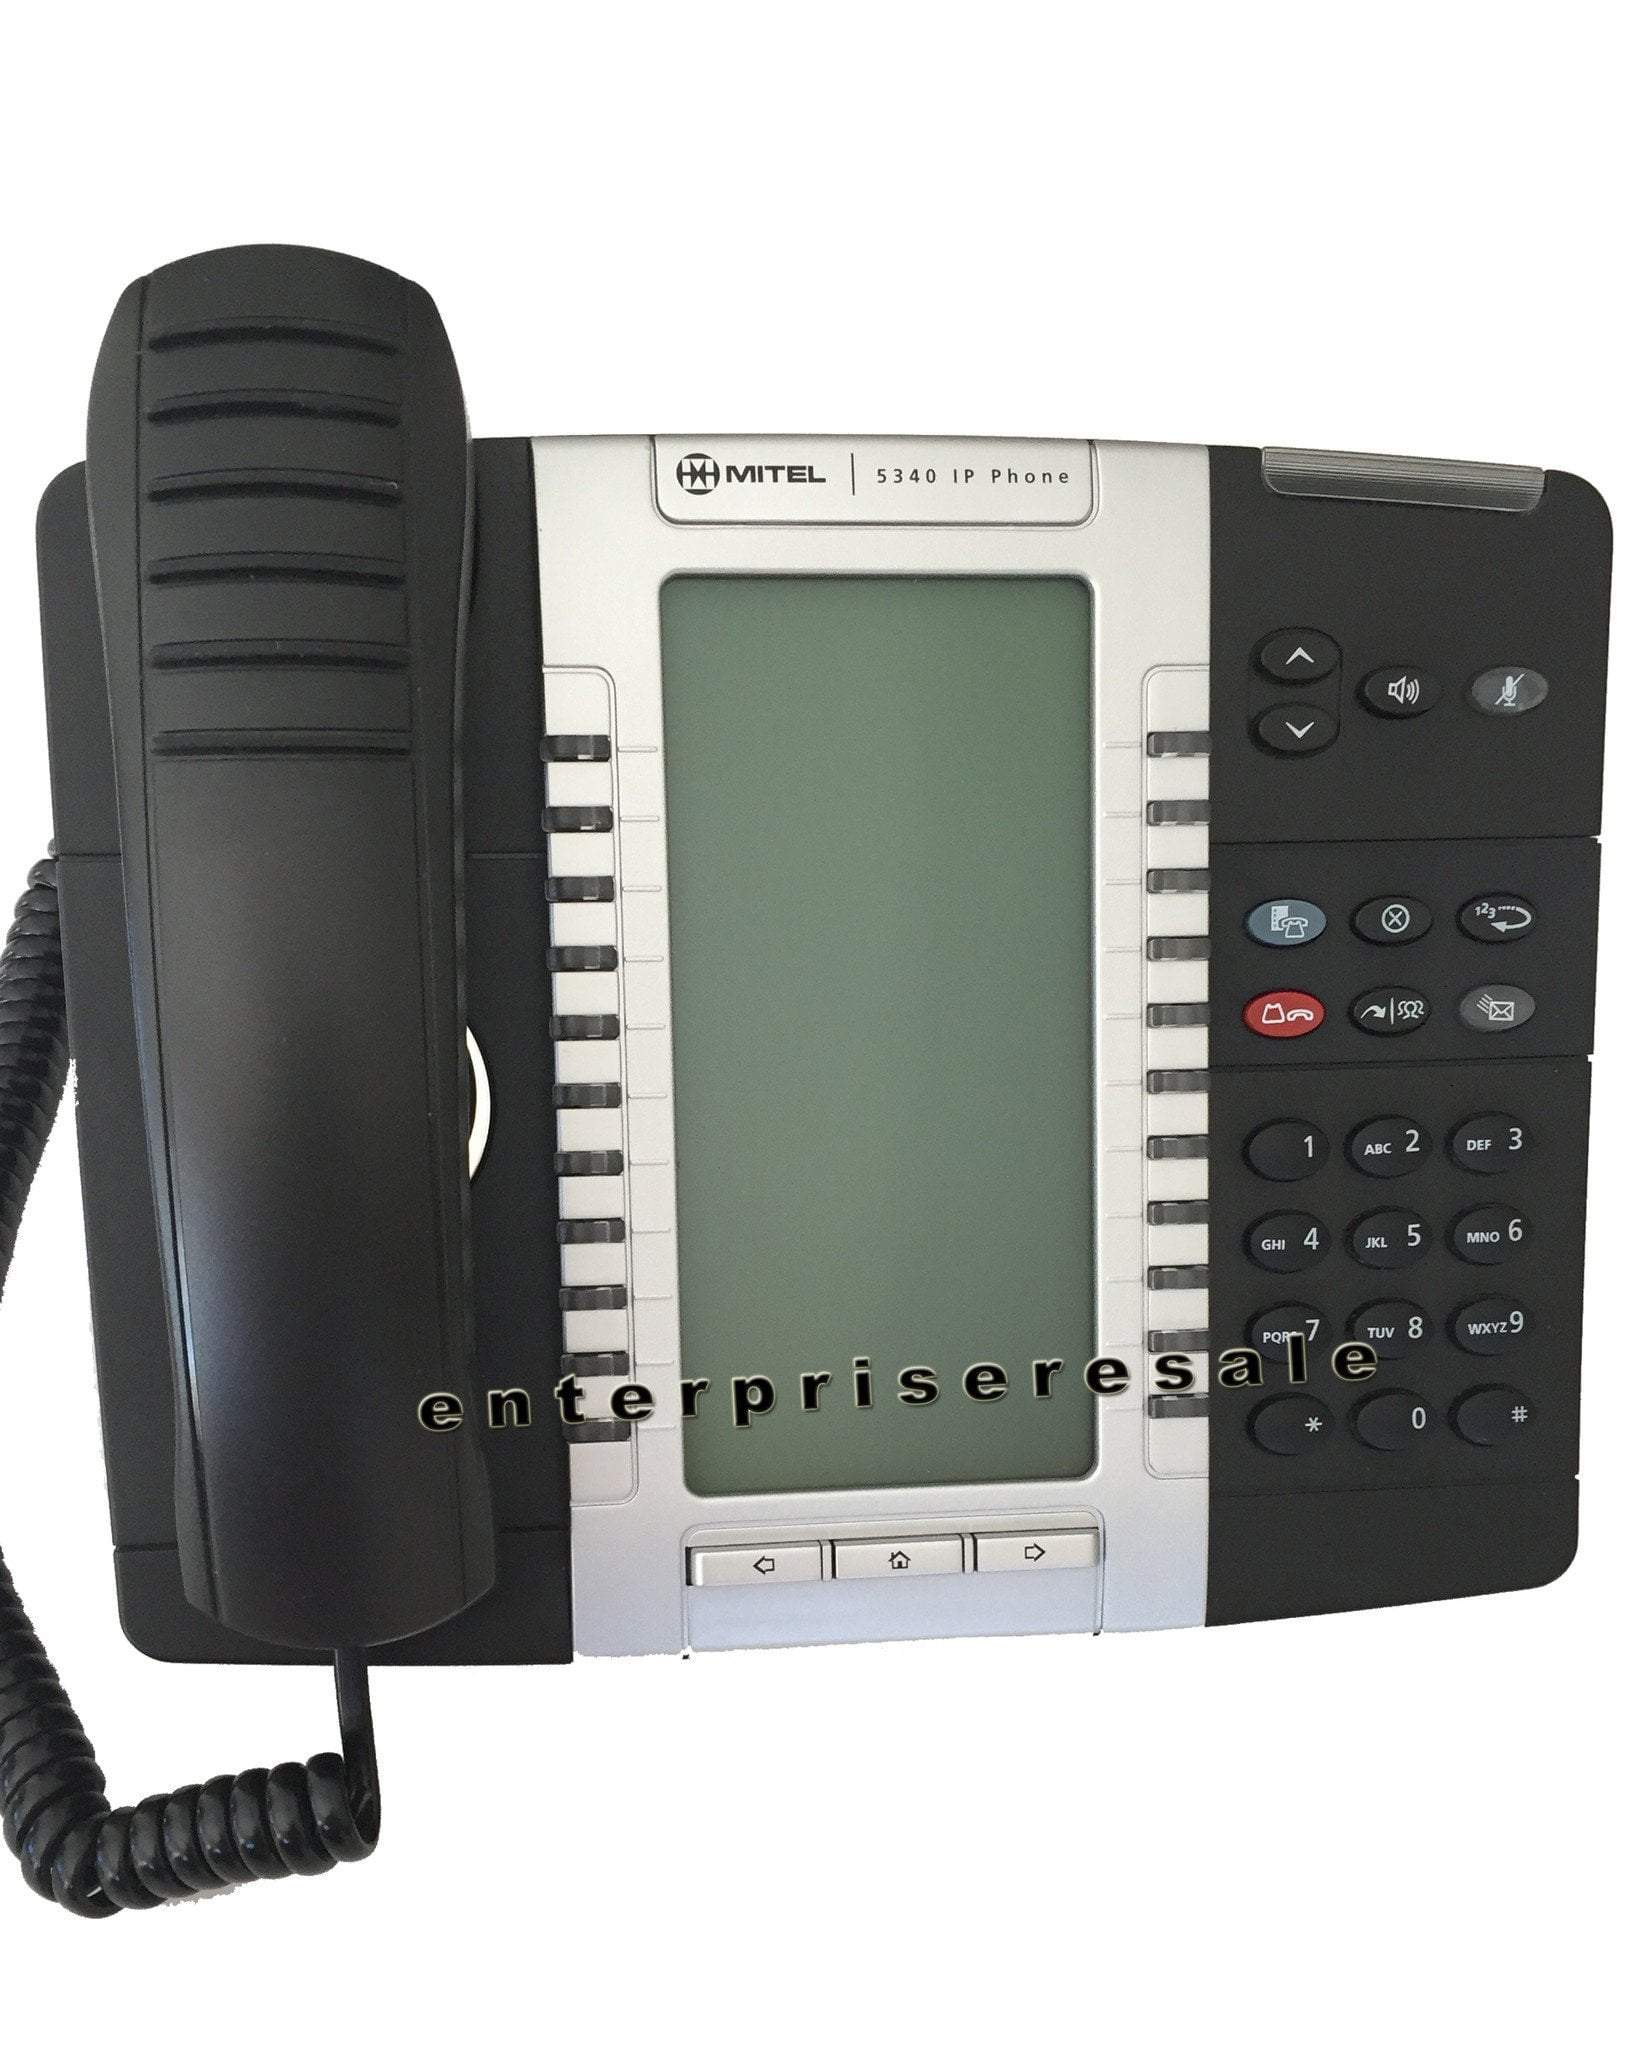 Smartphone Slp Telephone portable reconditionne IP732SILVER